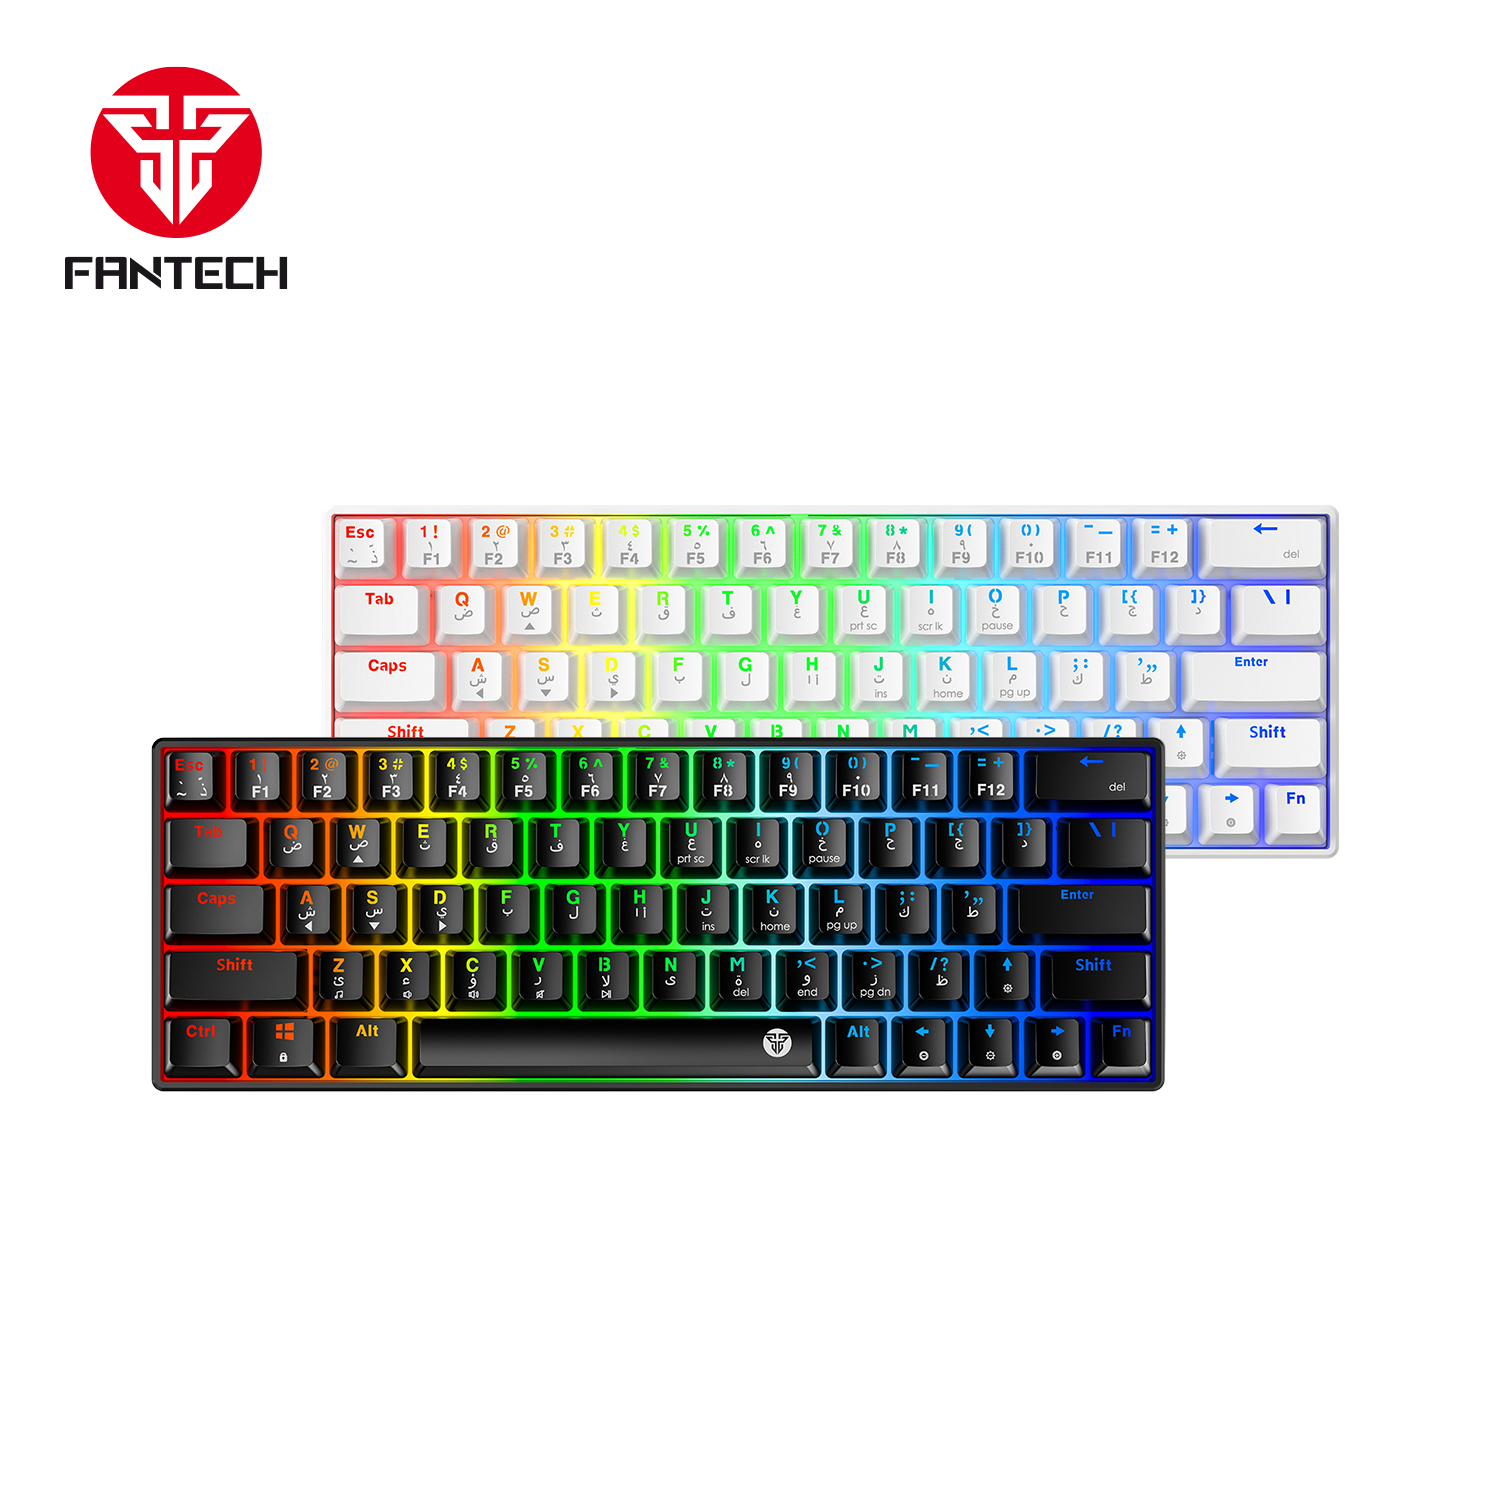 Fantech Atom63 MK859 Mechanical Gaming Keyboard Arabic/English Keyboard 20 JOD